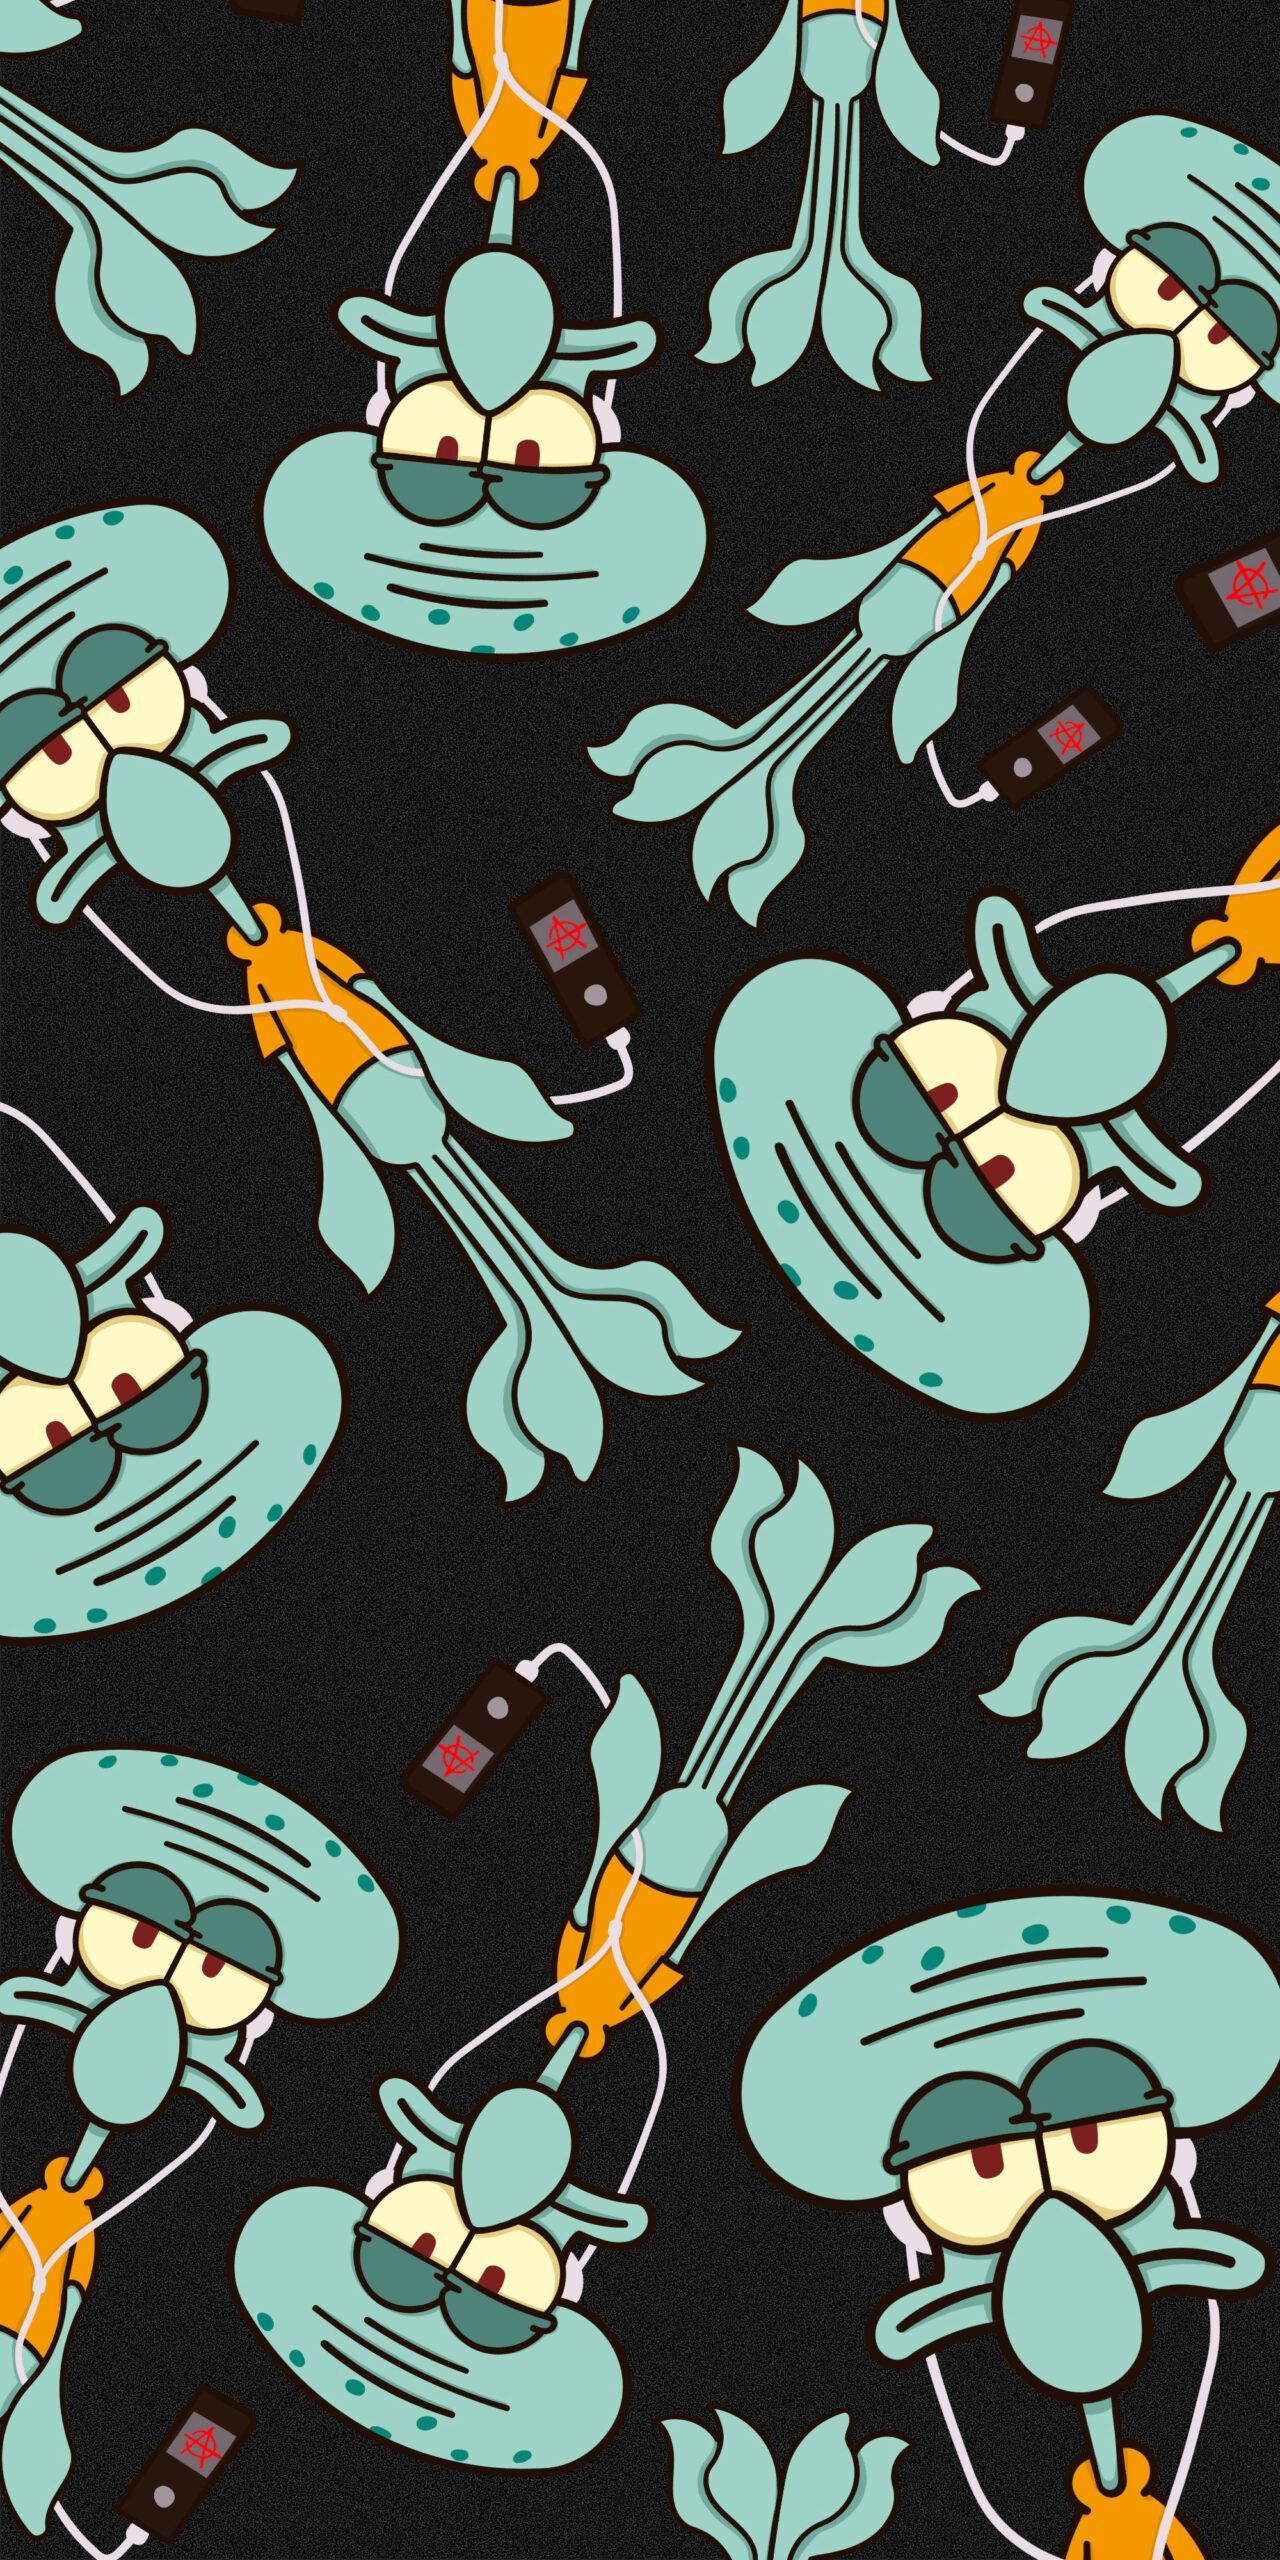 A wallpaper of squidward from spongebob - Squidward